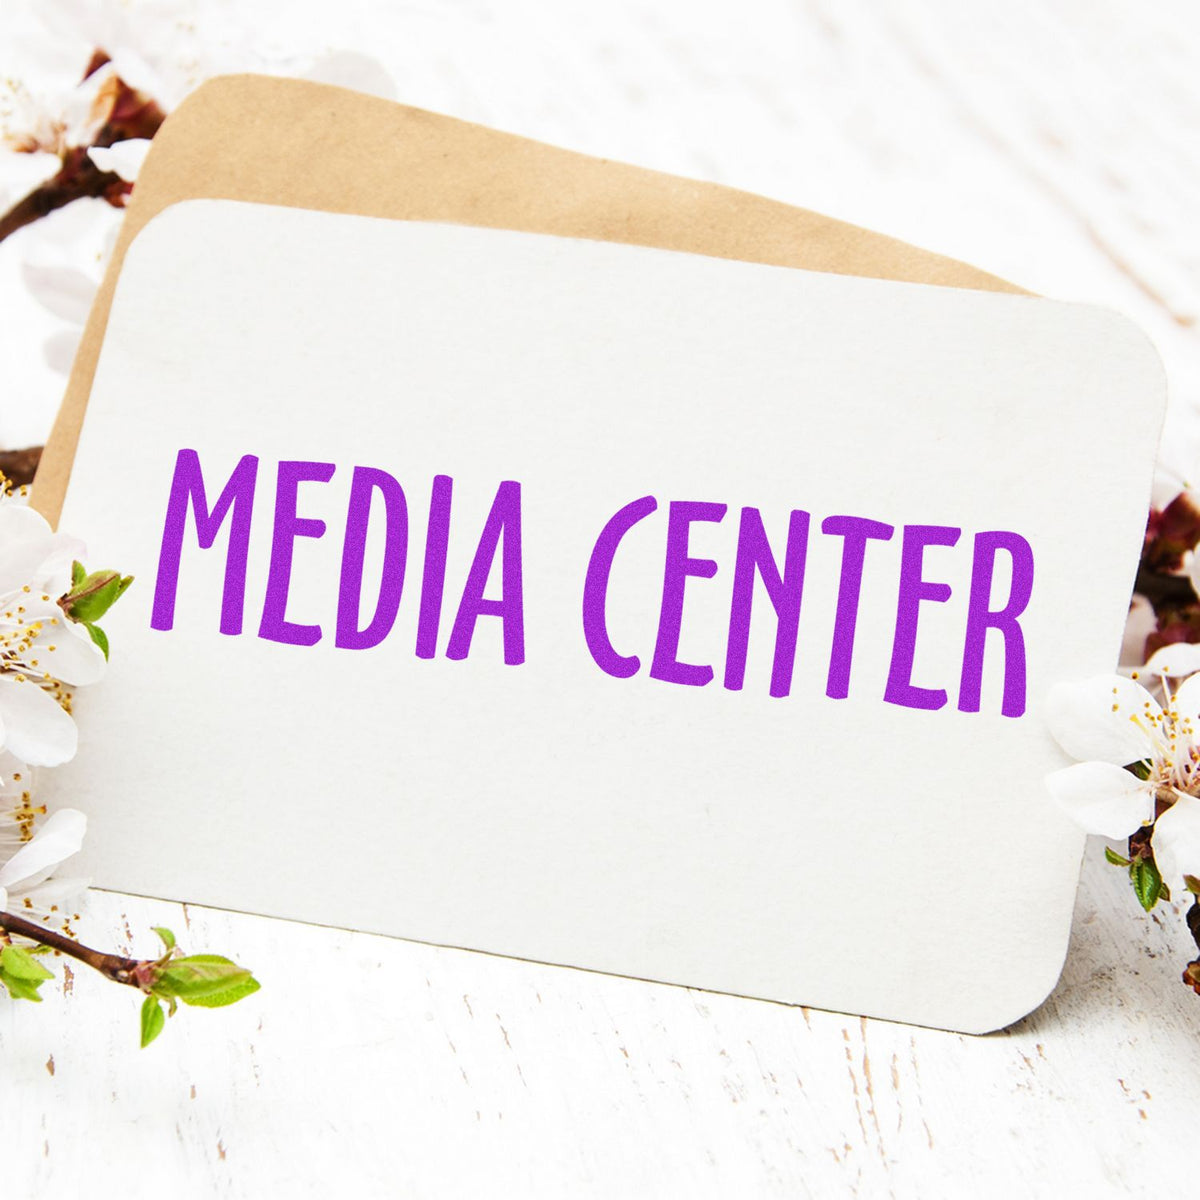 Media Center Rubber Stamp In Use